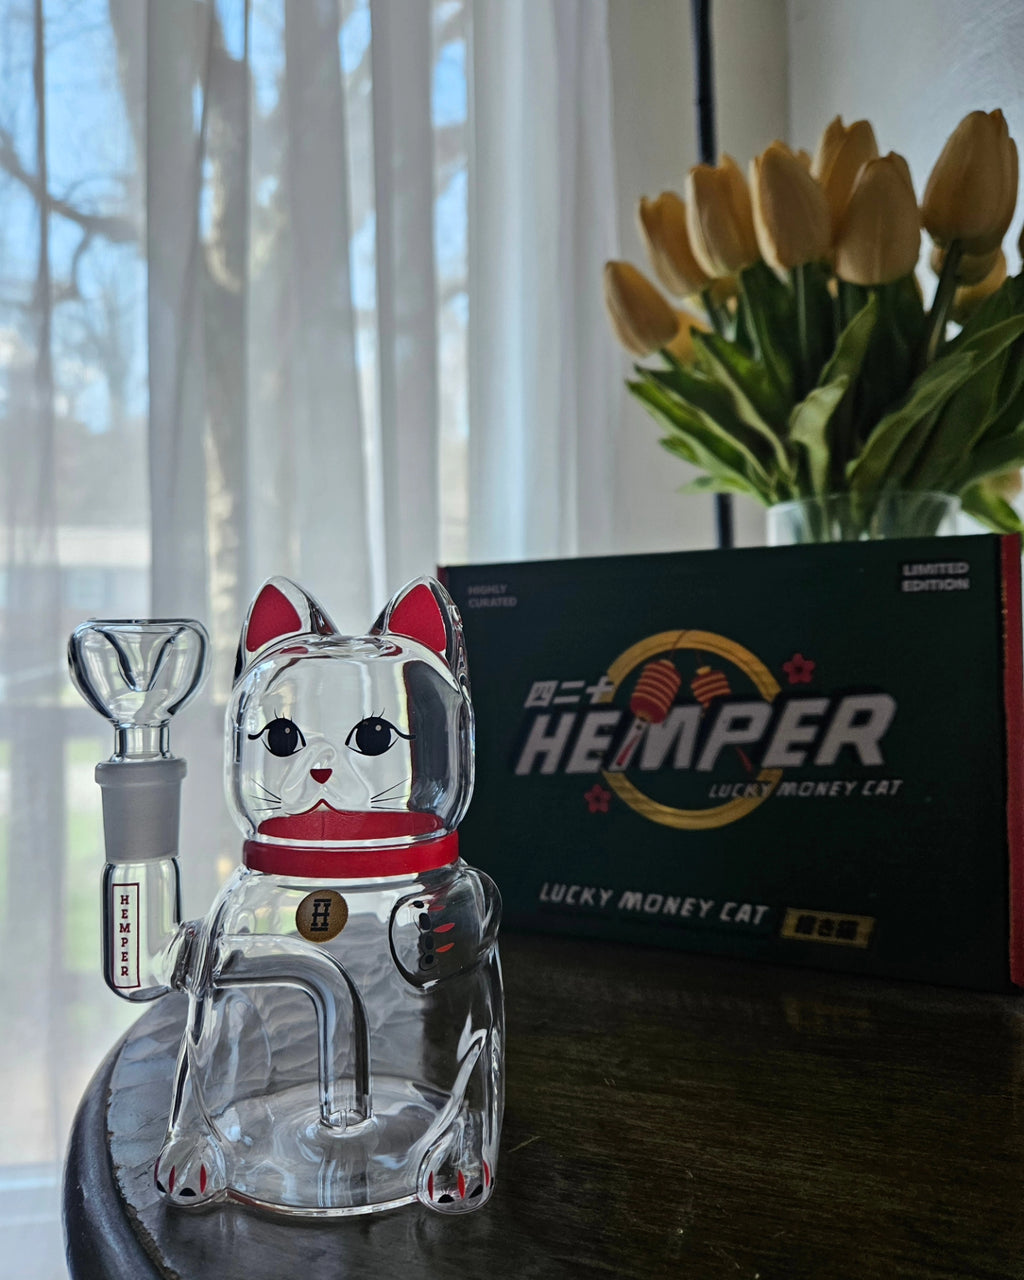 Hemper Lucky Money Cat Water Pipe